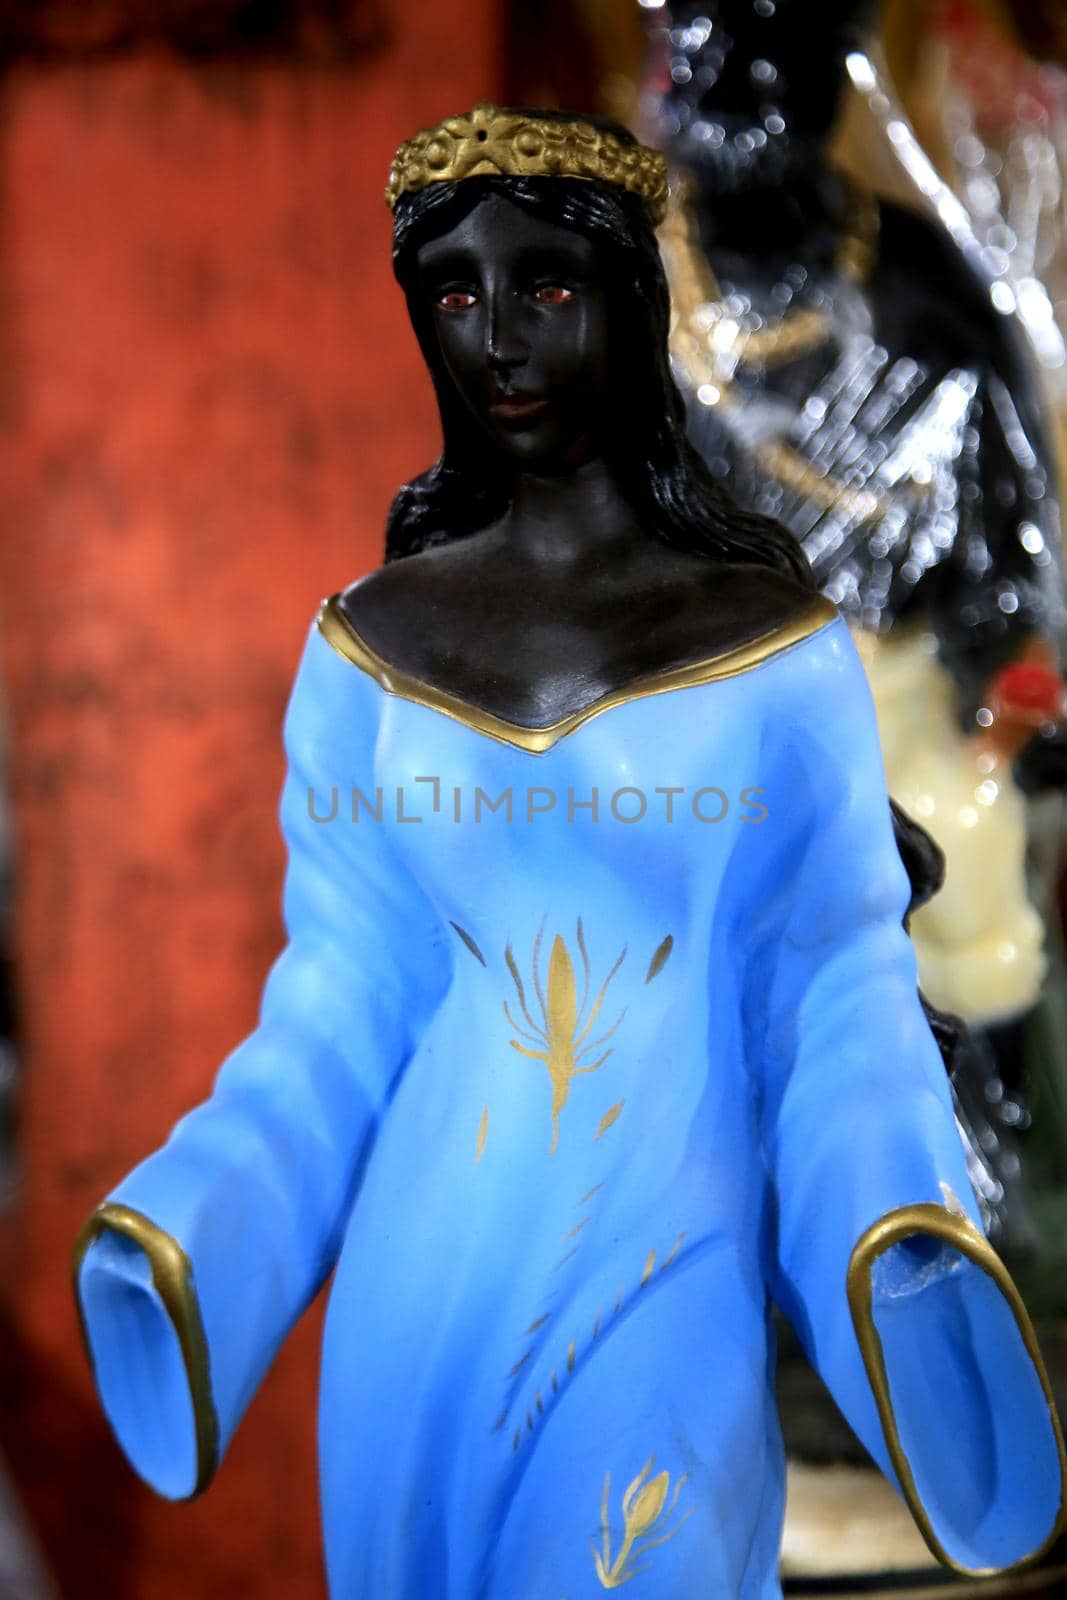 salvador, bahia, brazil - june 28, 2021: sculpture of the oririxa Iemanja, Candomble entity, is seen for sale at the fair Sao Joaquim in the city of Salvador.


